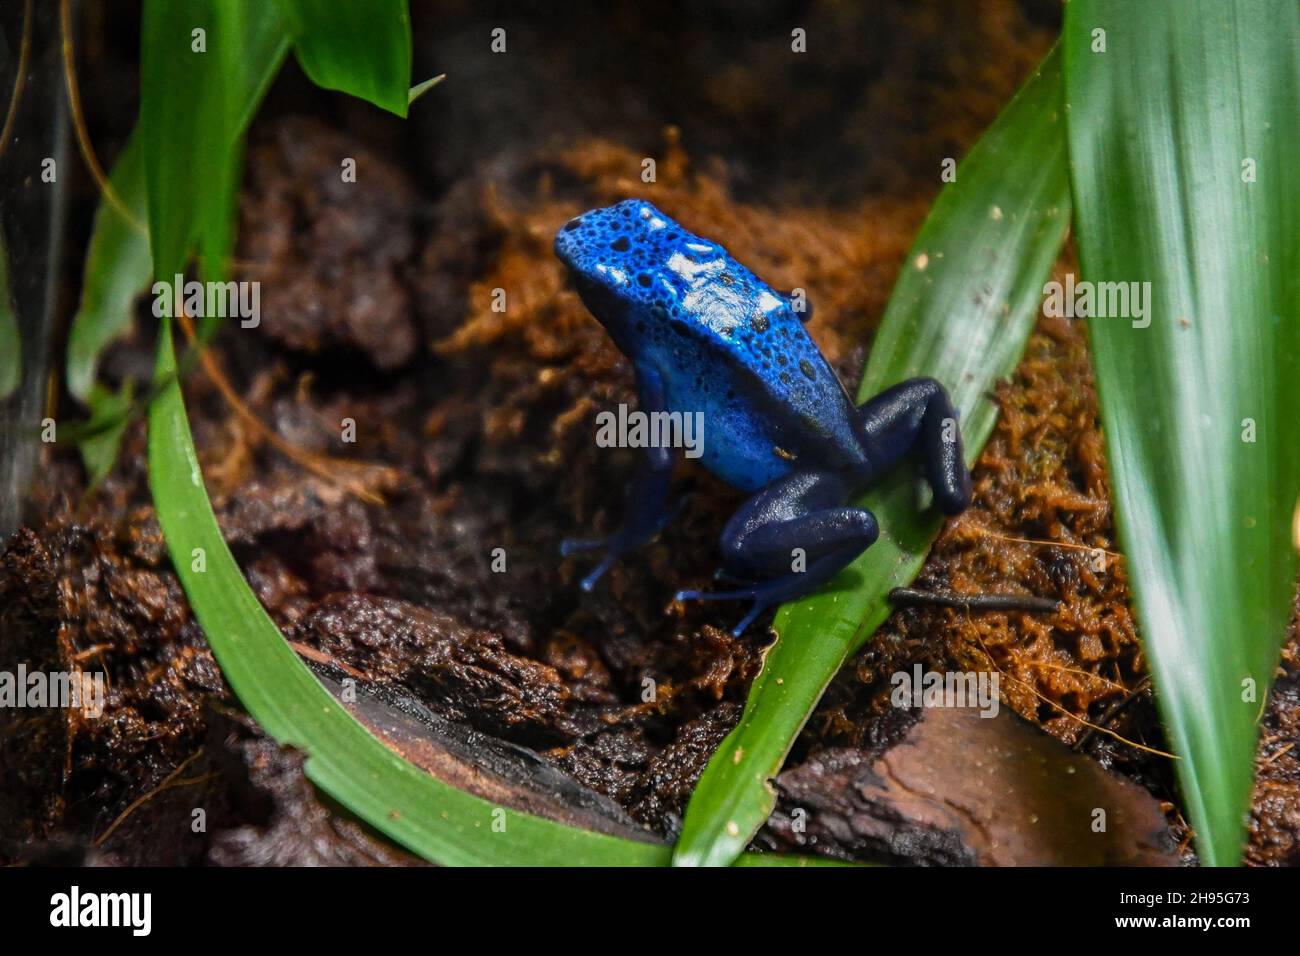 Una rana de dardos venenosos azules o rana de flechas venenosas azules (Dendrobates tinctorius 'azureus') dentro de un terrario en el Acuario de Génova, Livorno, Italia Foto de stock